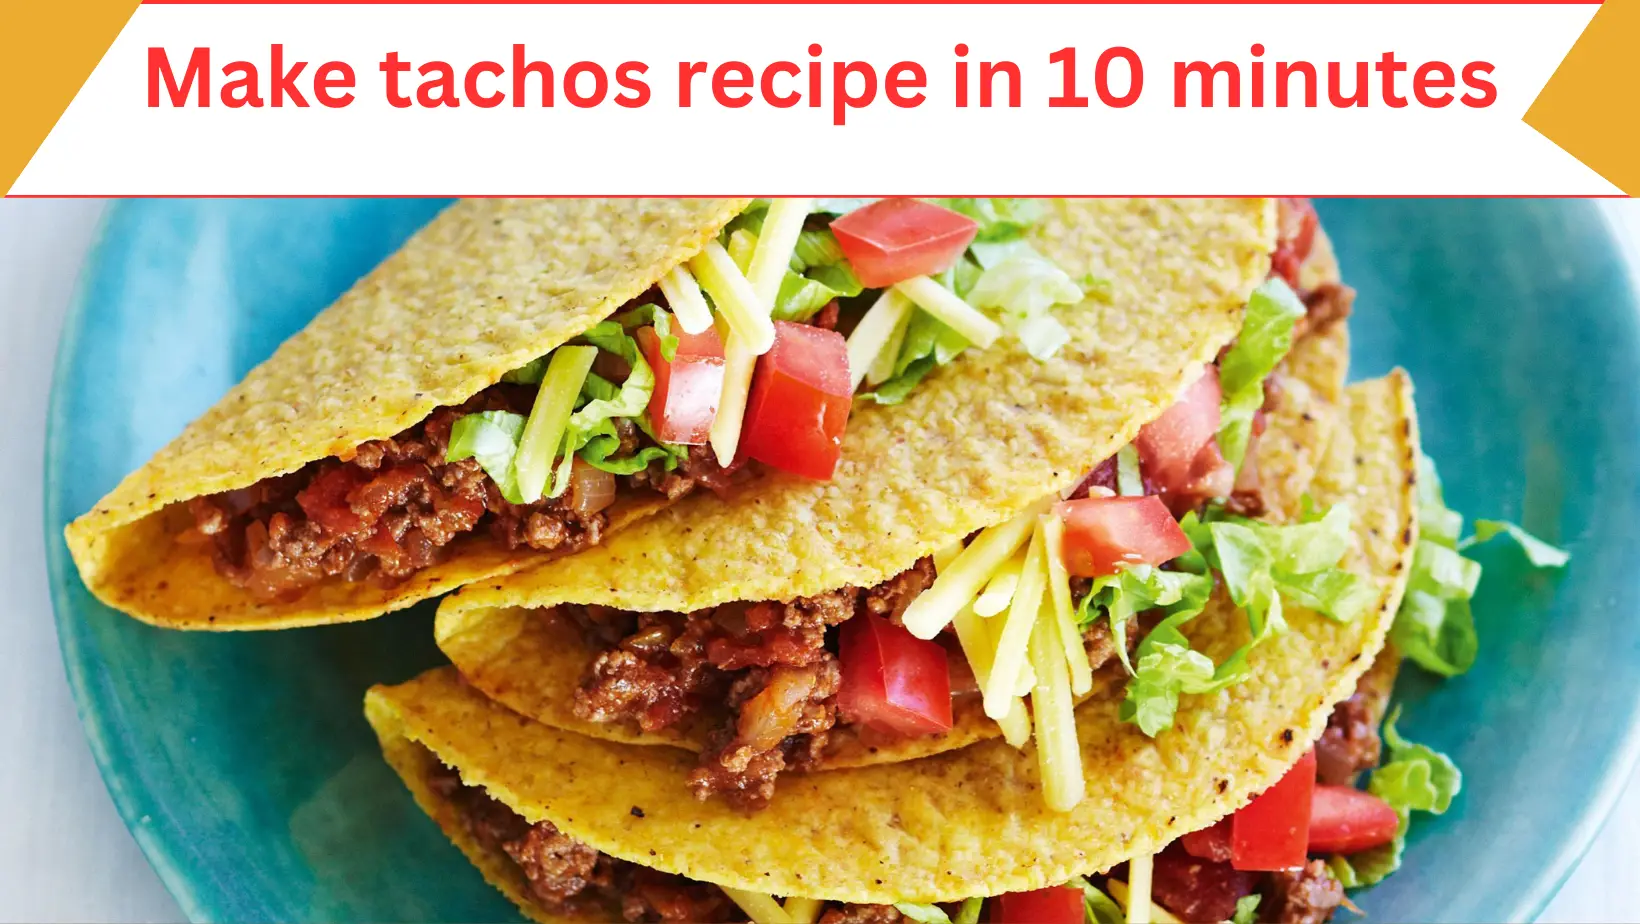 Make tachos recipe in 10 minutes